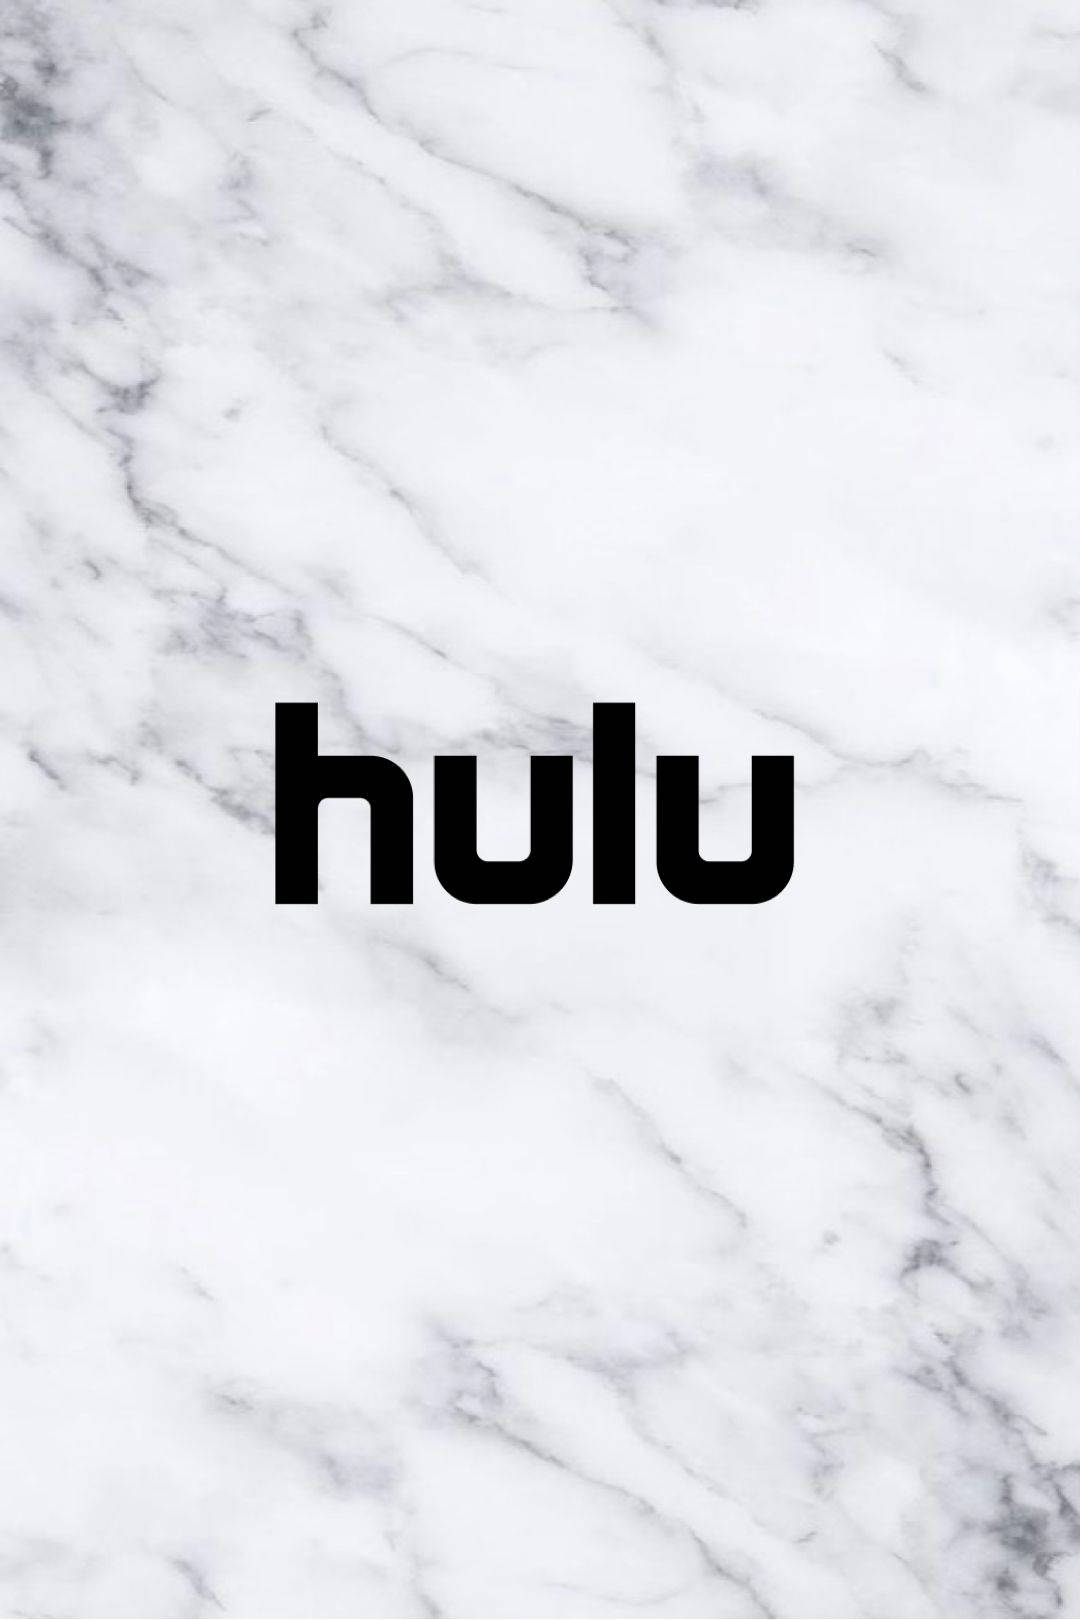 Hulu In Marble Wallpaper